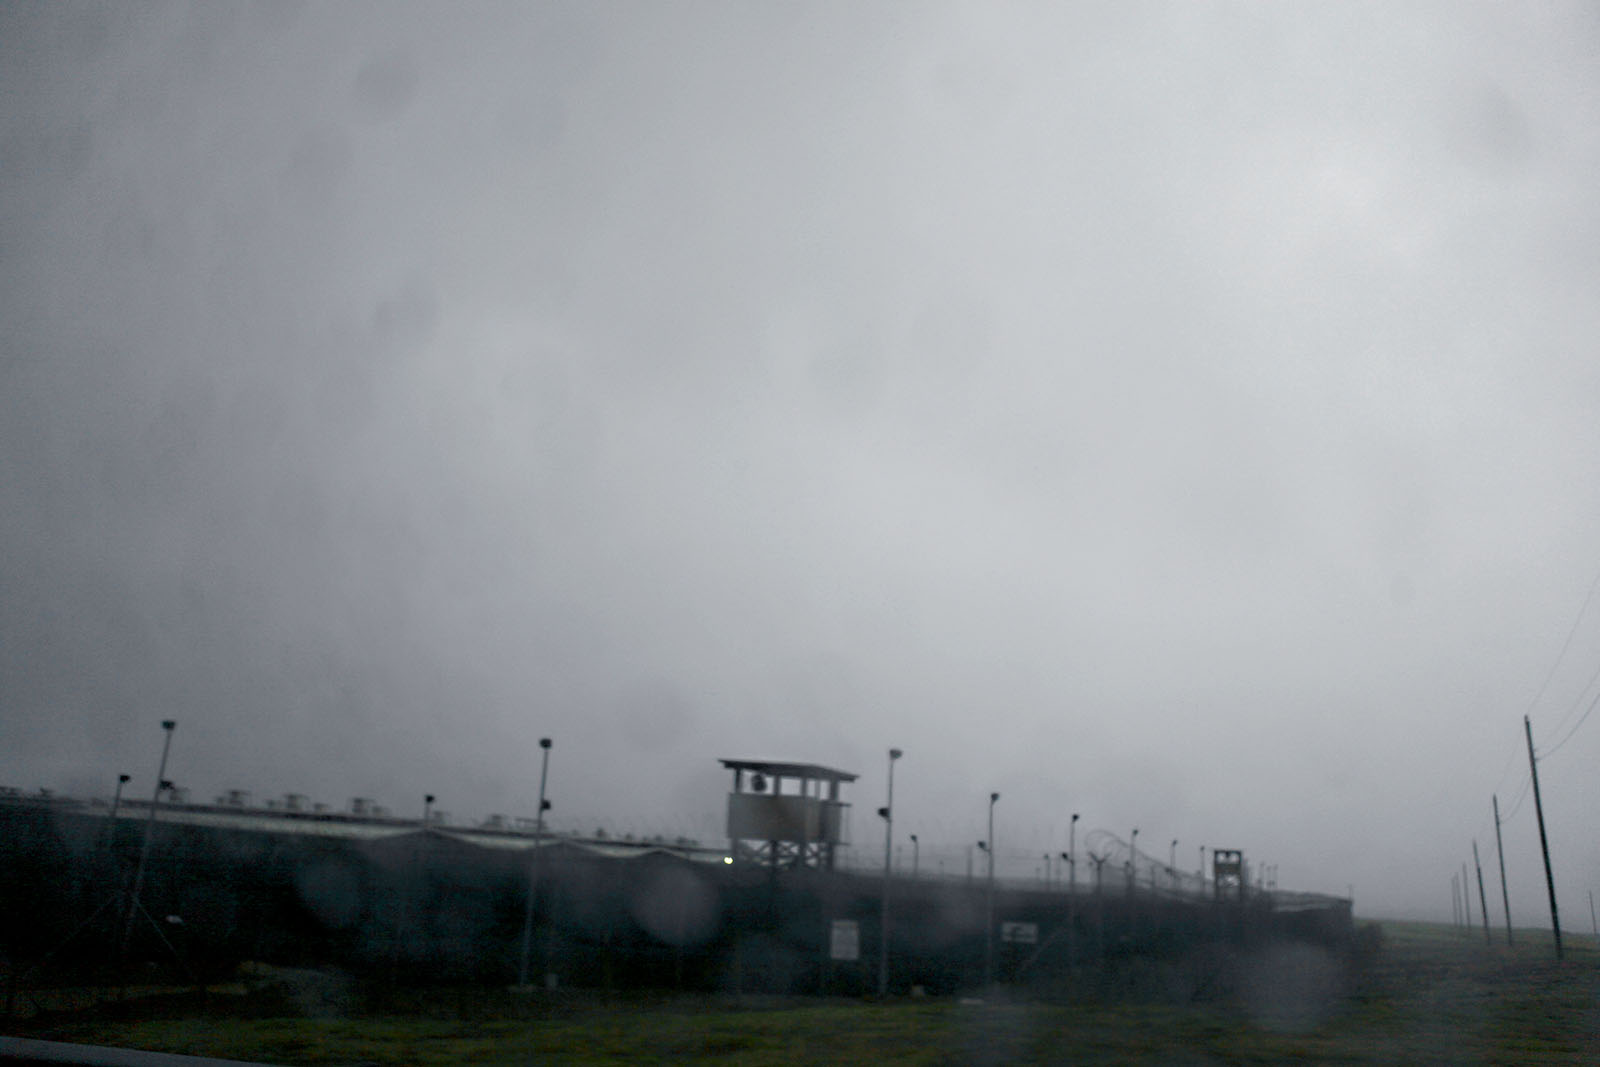 Guantanamo Bay detention camp. 